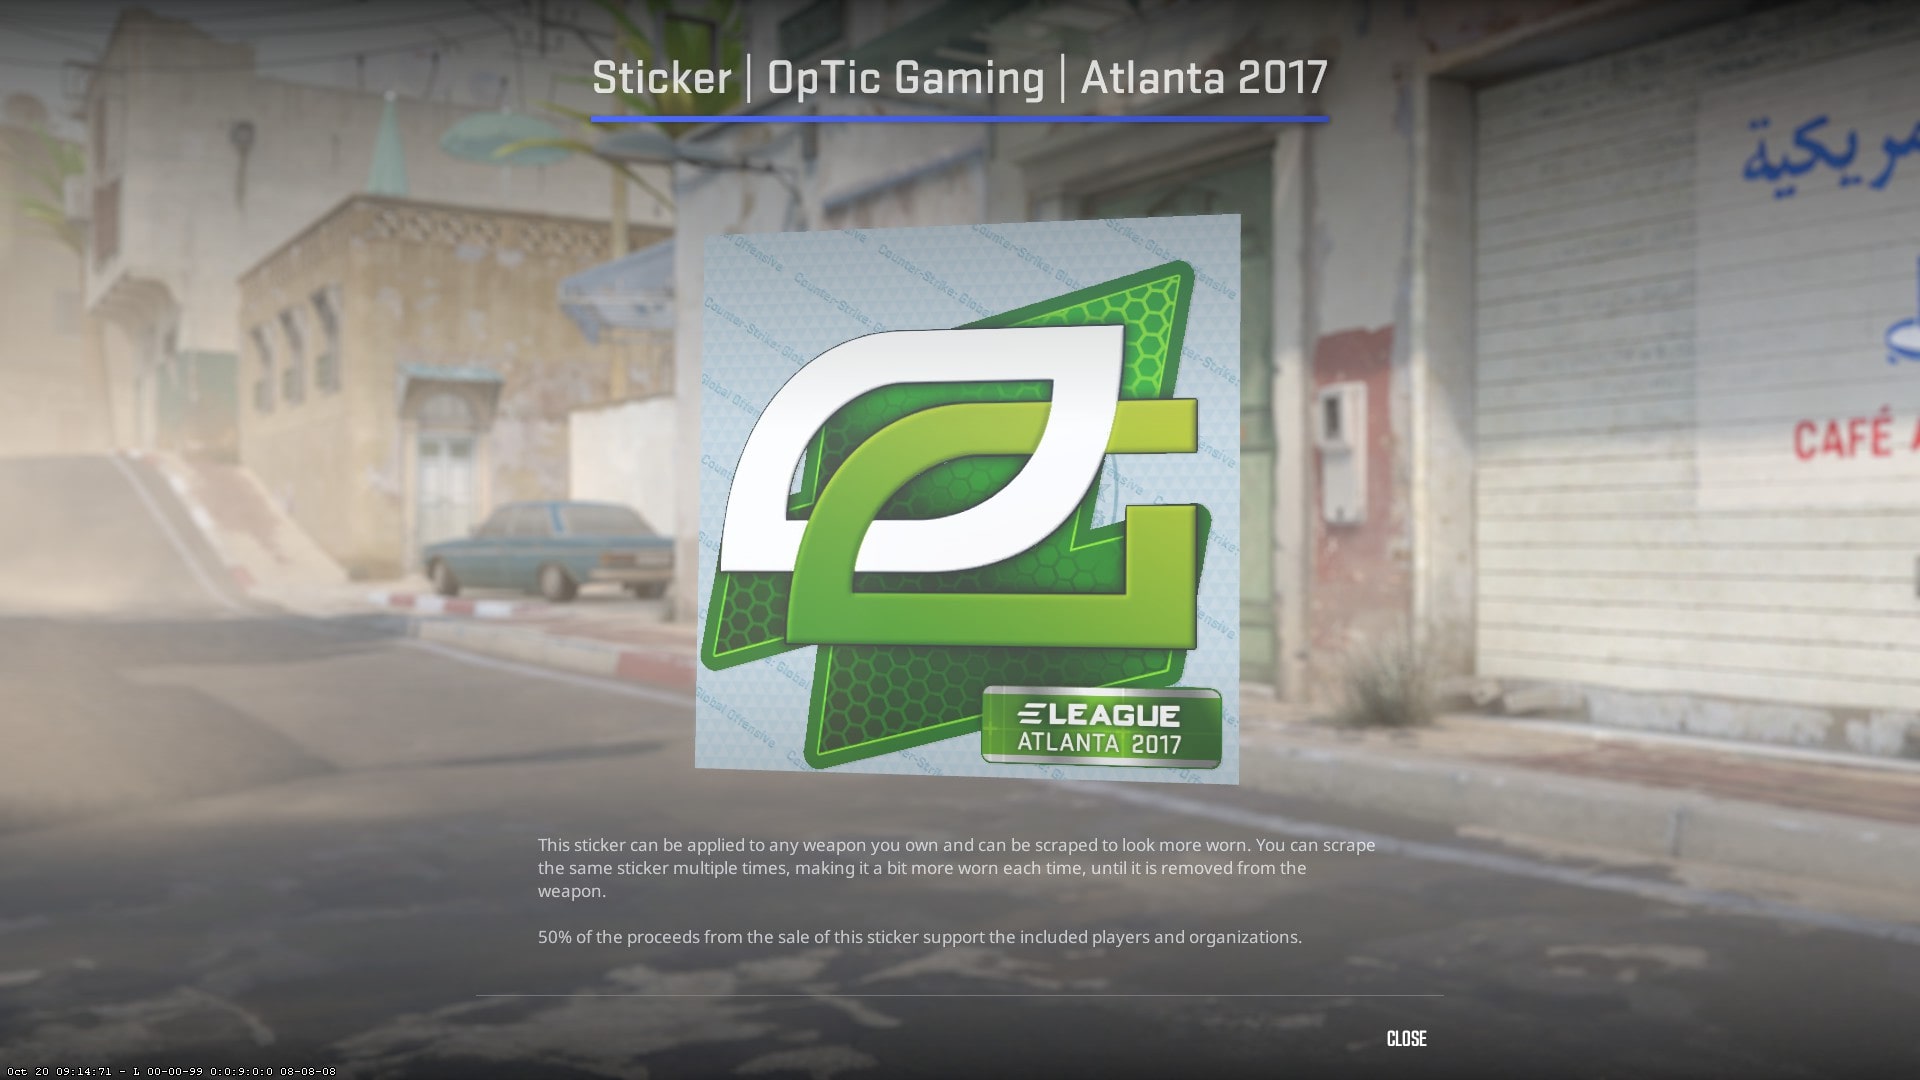 Sticker | Optic Gaming | Atlanta 2017